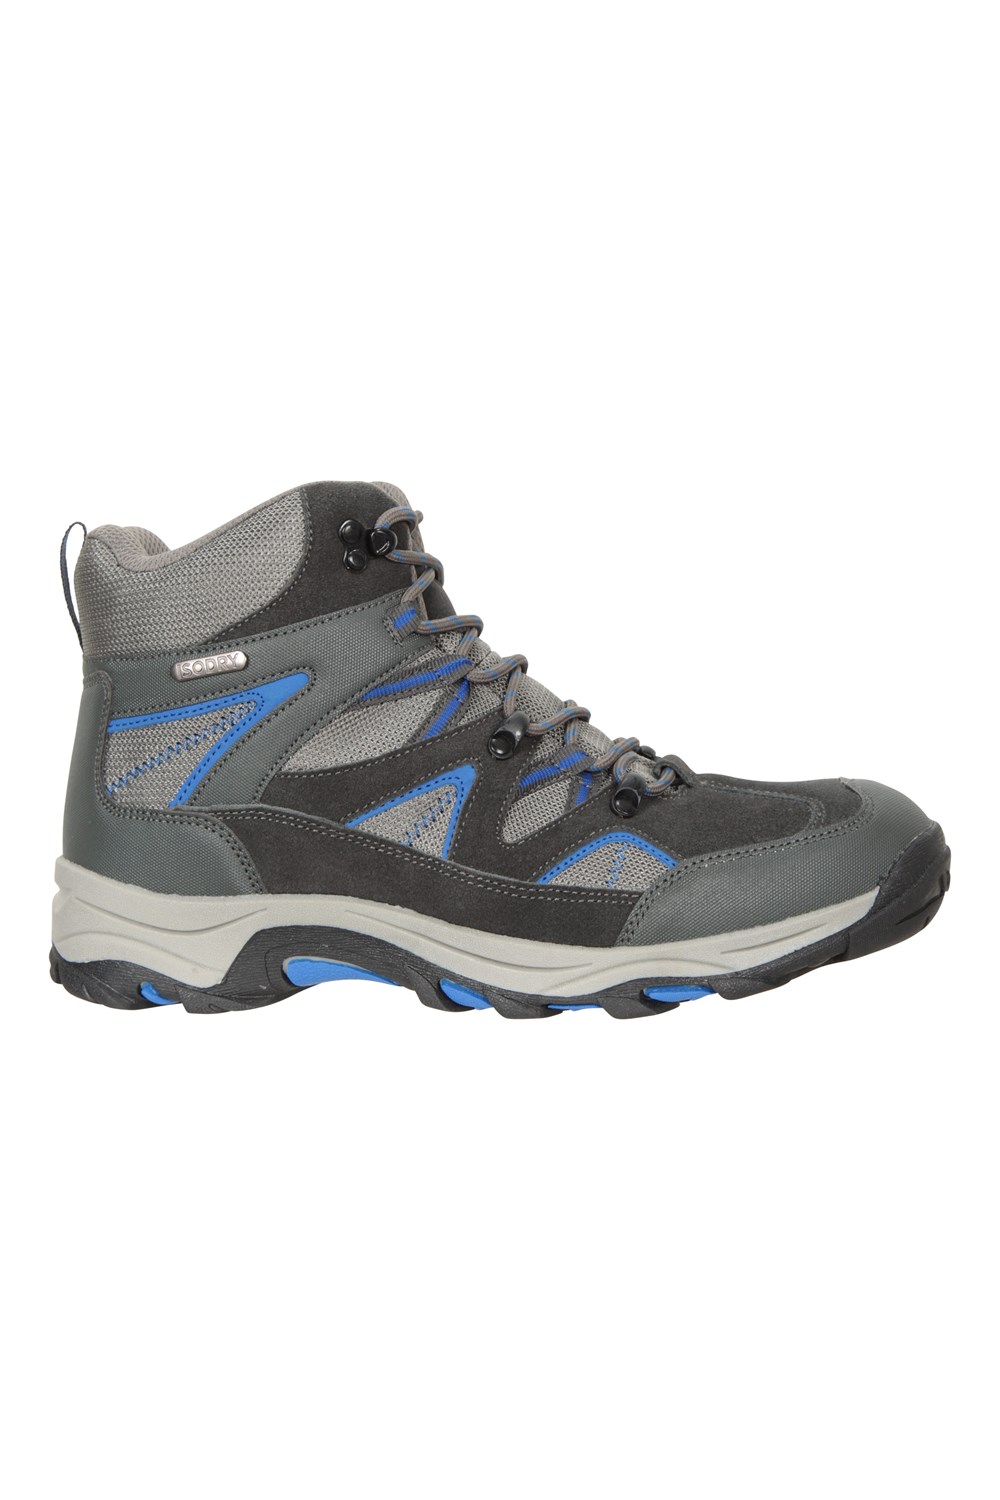 Mountain Warehouse Rapid Men's Waterproof Walking Boots Non Slip Hiking ...